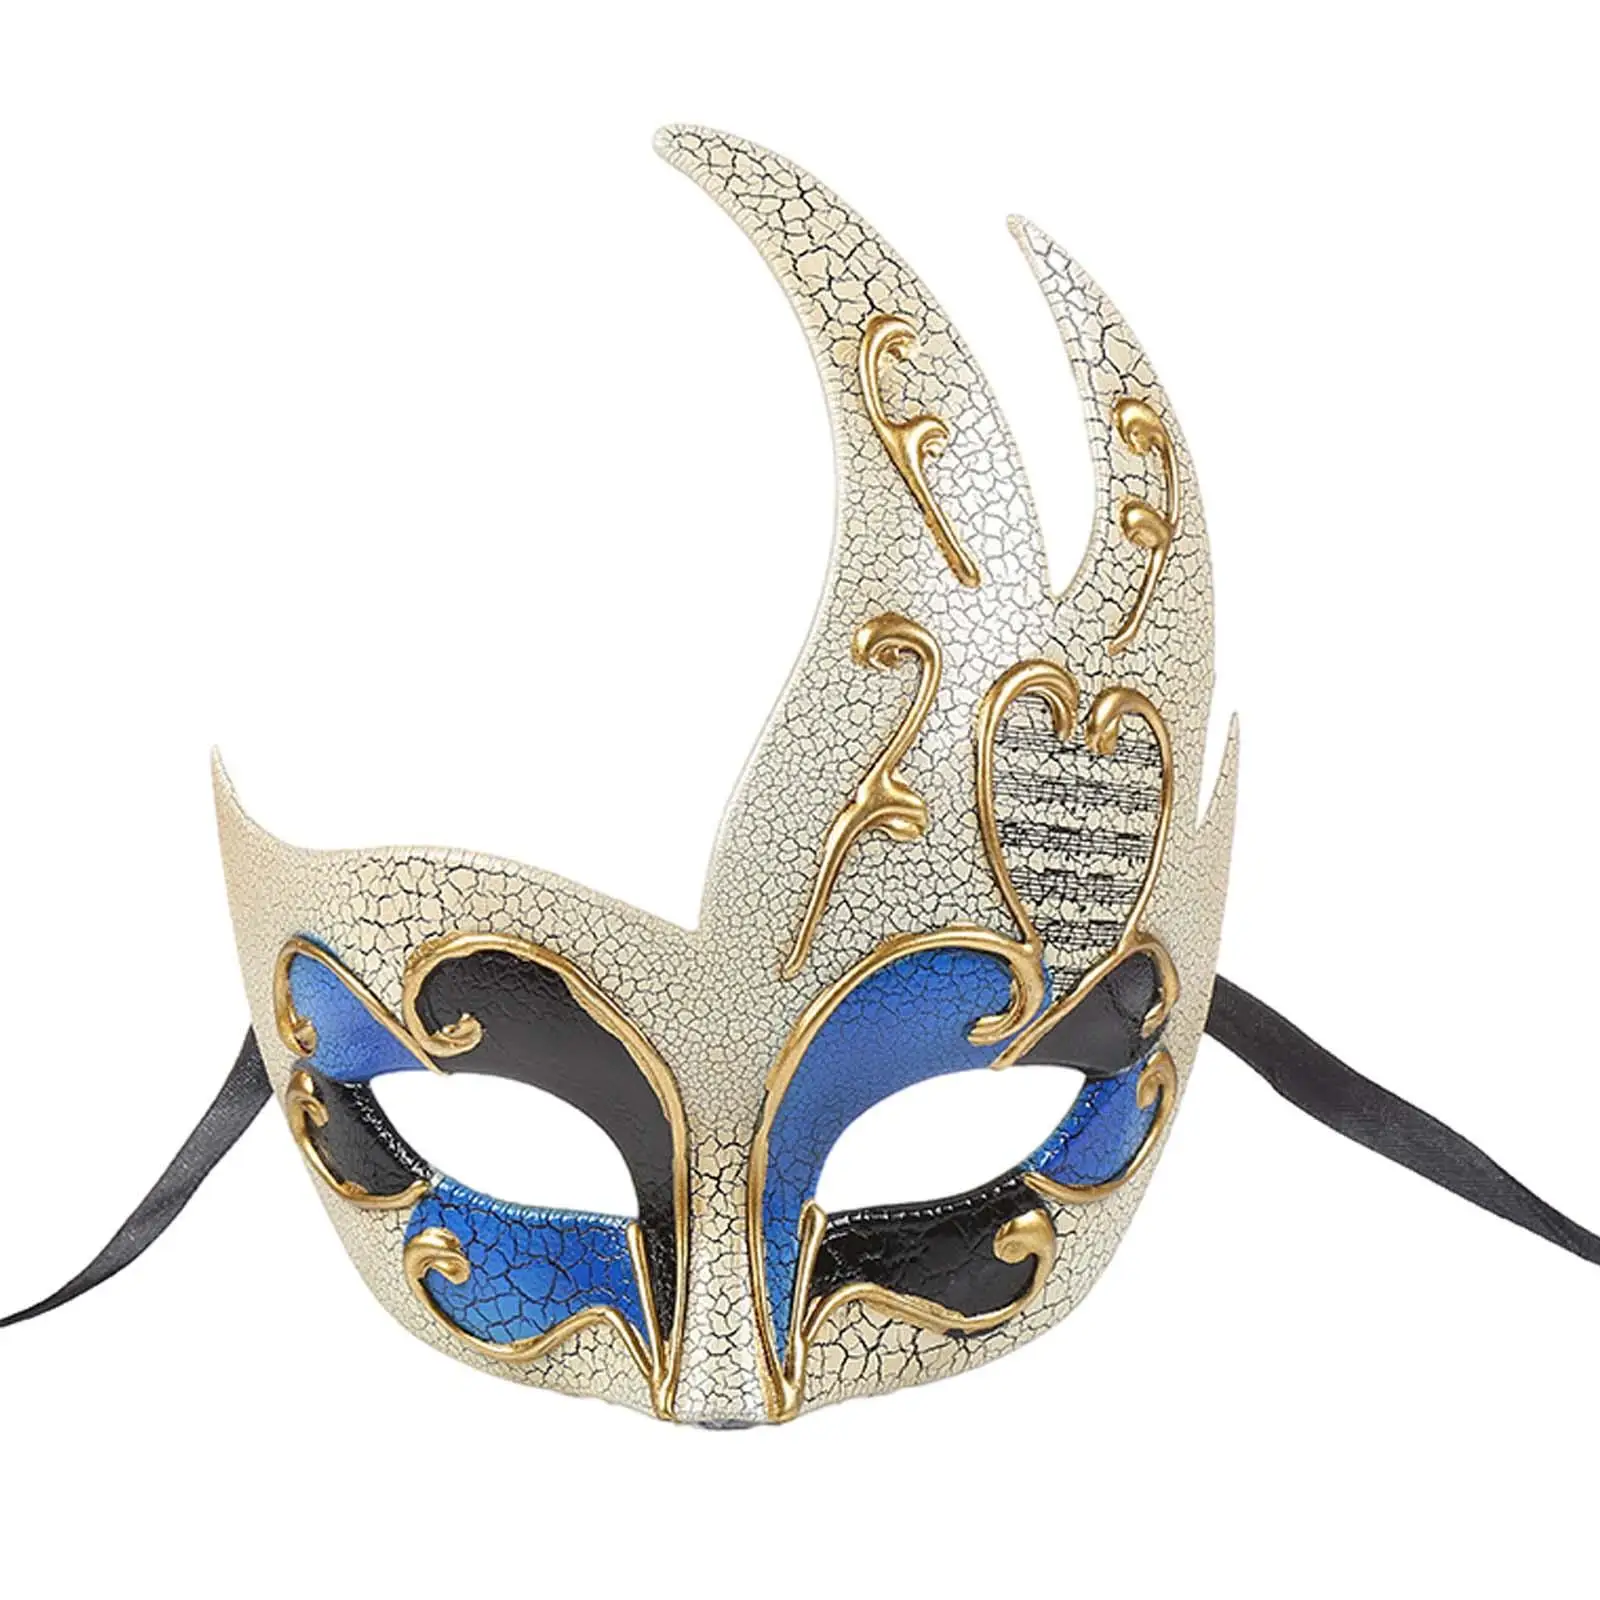 Flame Shape Mask Decorative Portable Halloween Fancy Dress Masquerade Mask